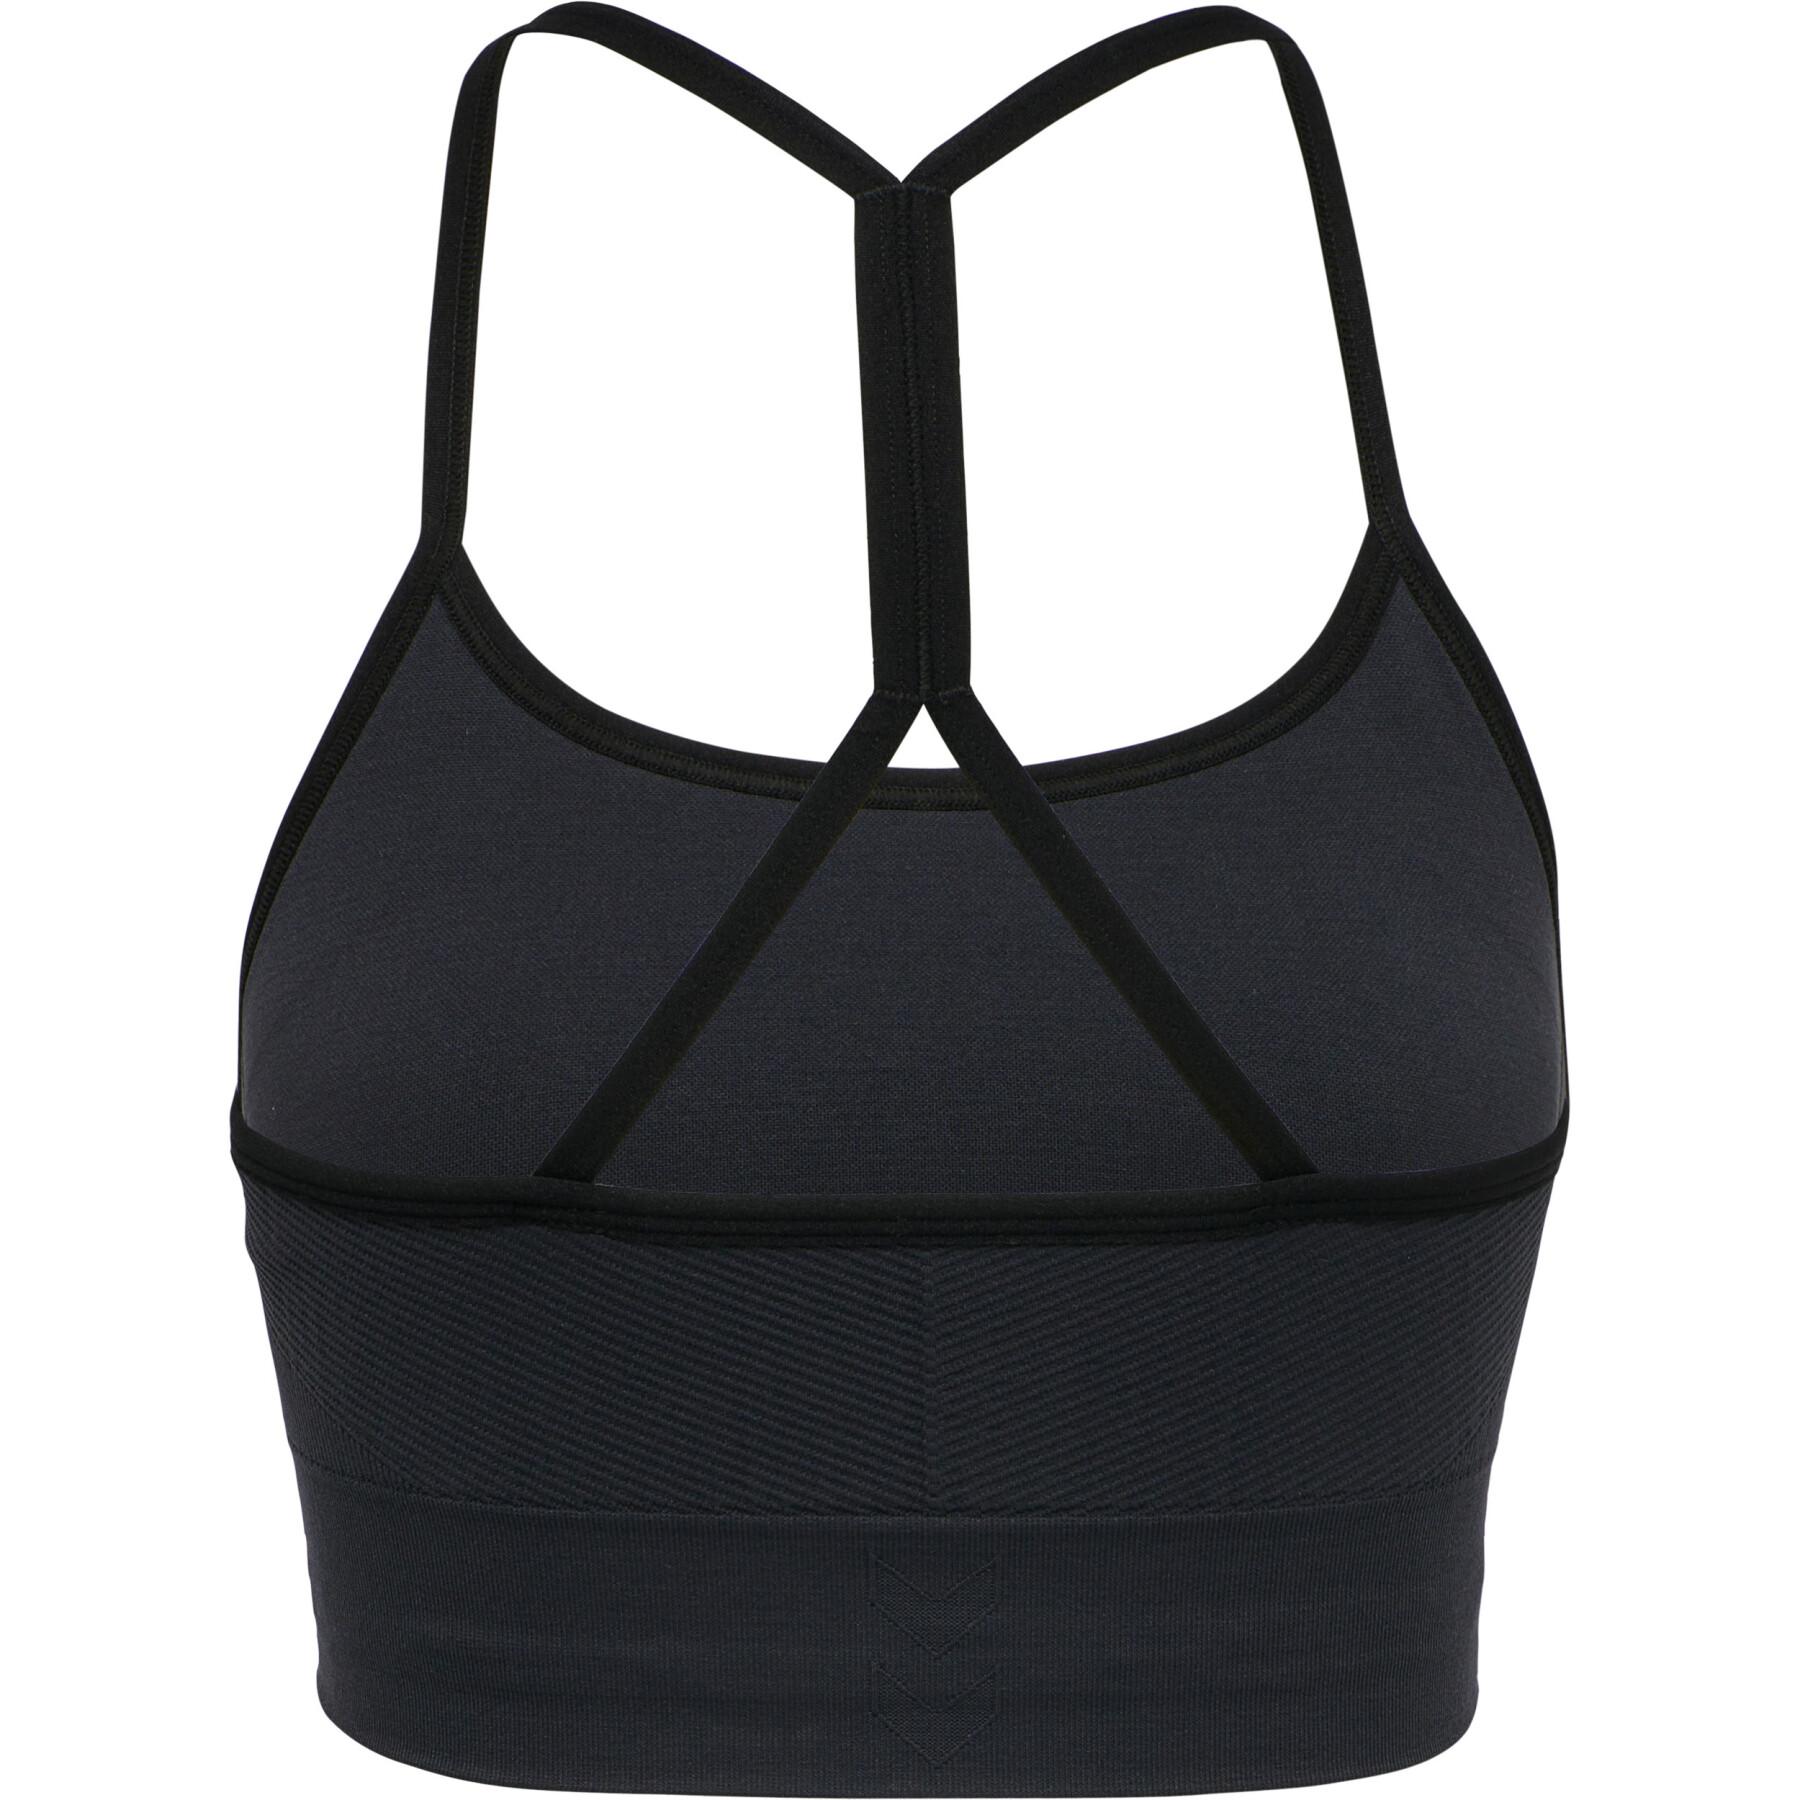 Seamless sports bra for women Hummel Shaping - Hummel - Brands - Lifestyle